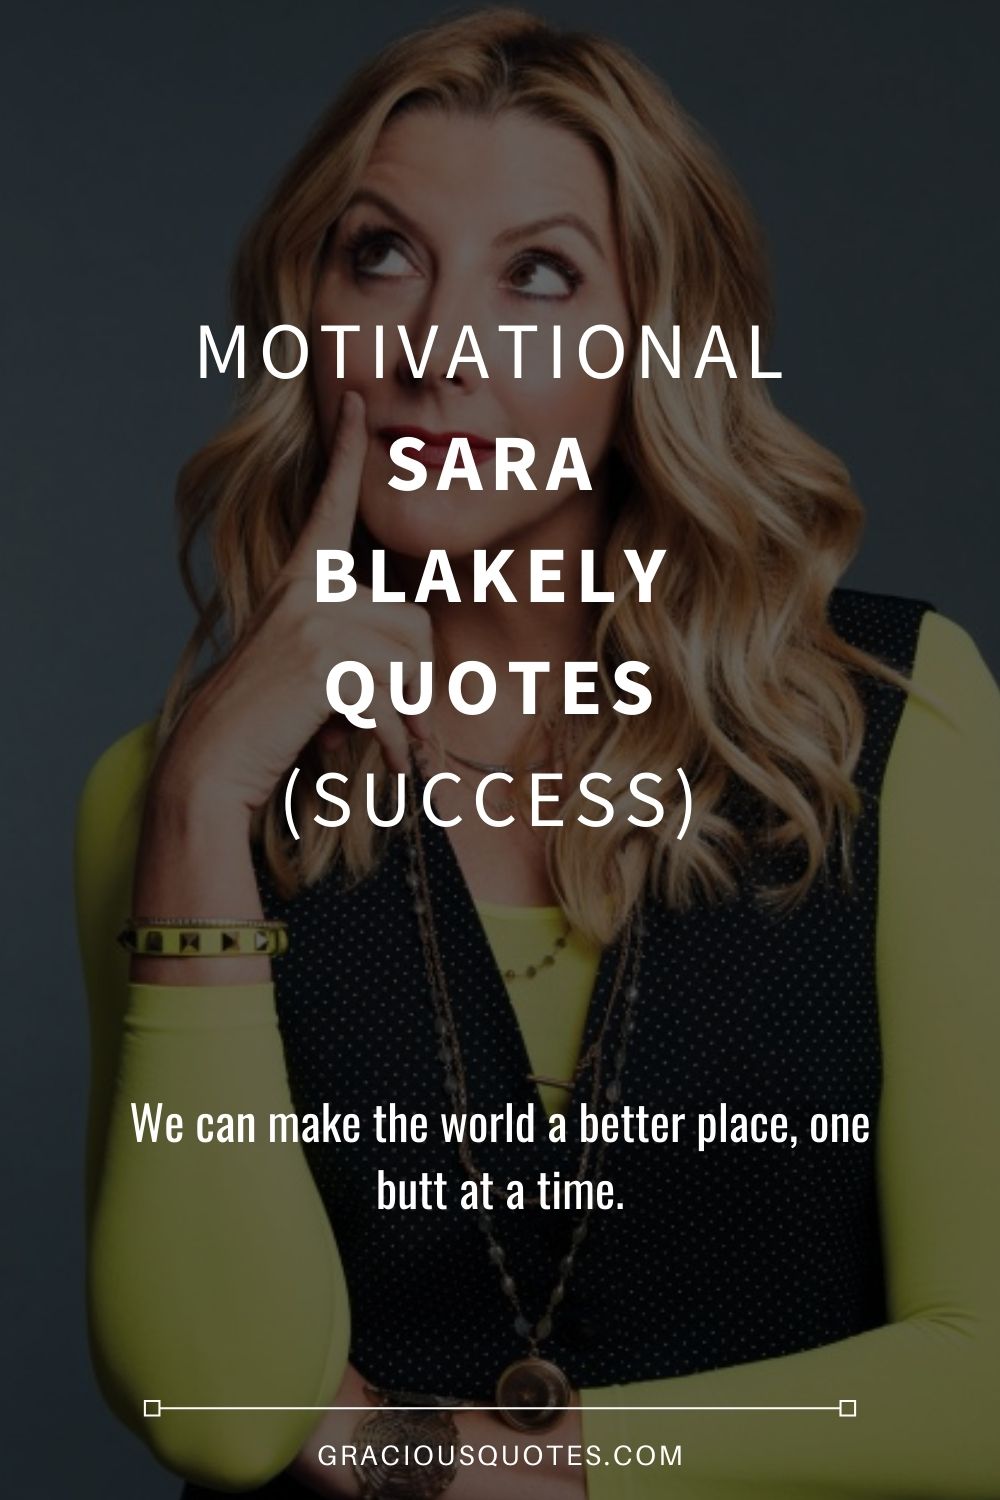 Motivational Sara Blakely Quotes (SUCCESS) - Gracious Quotes